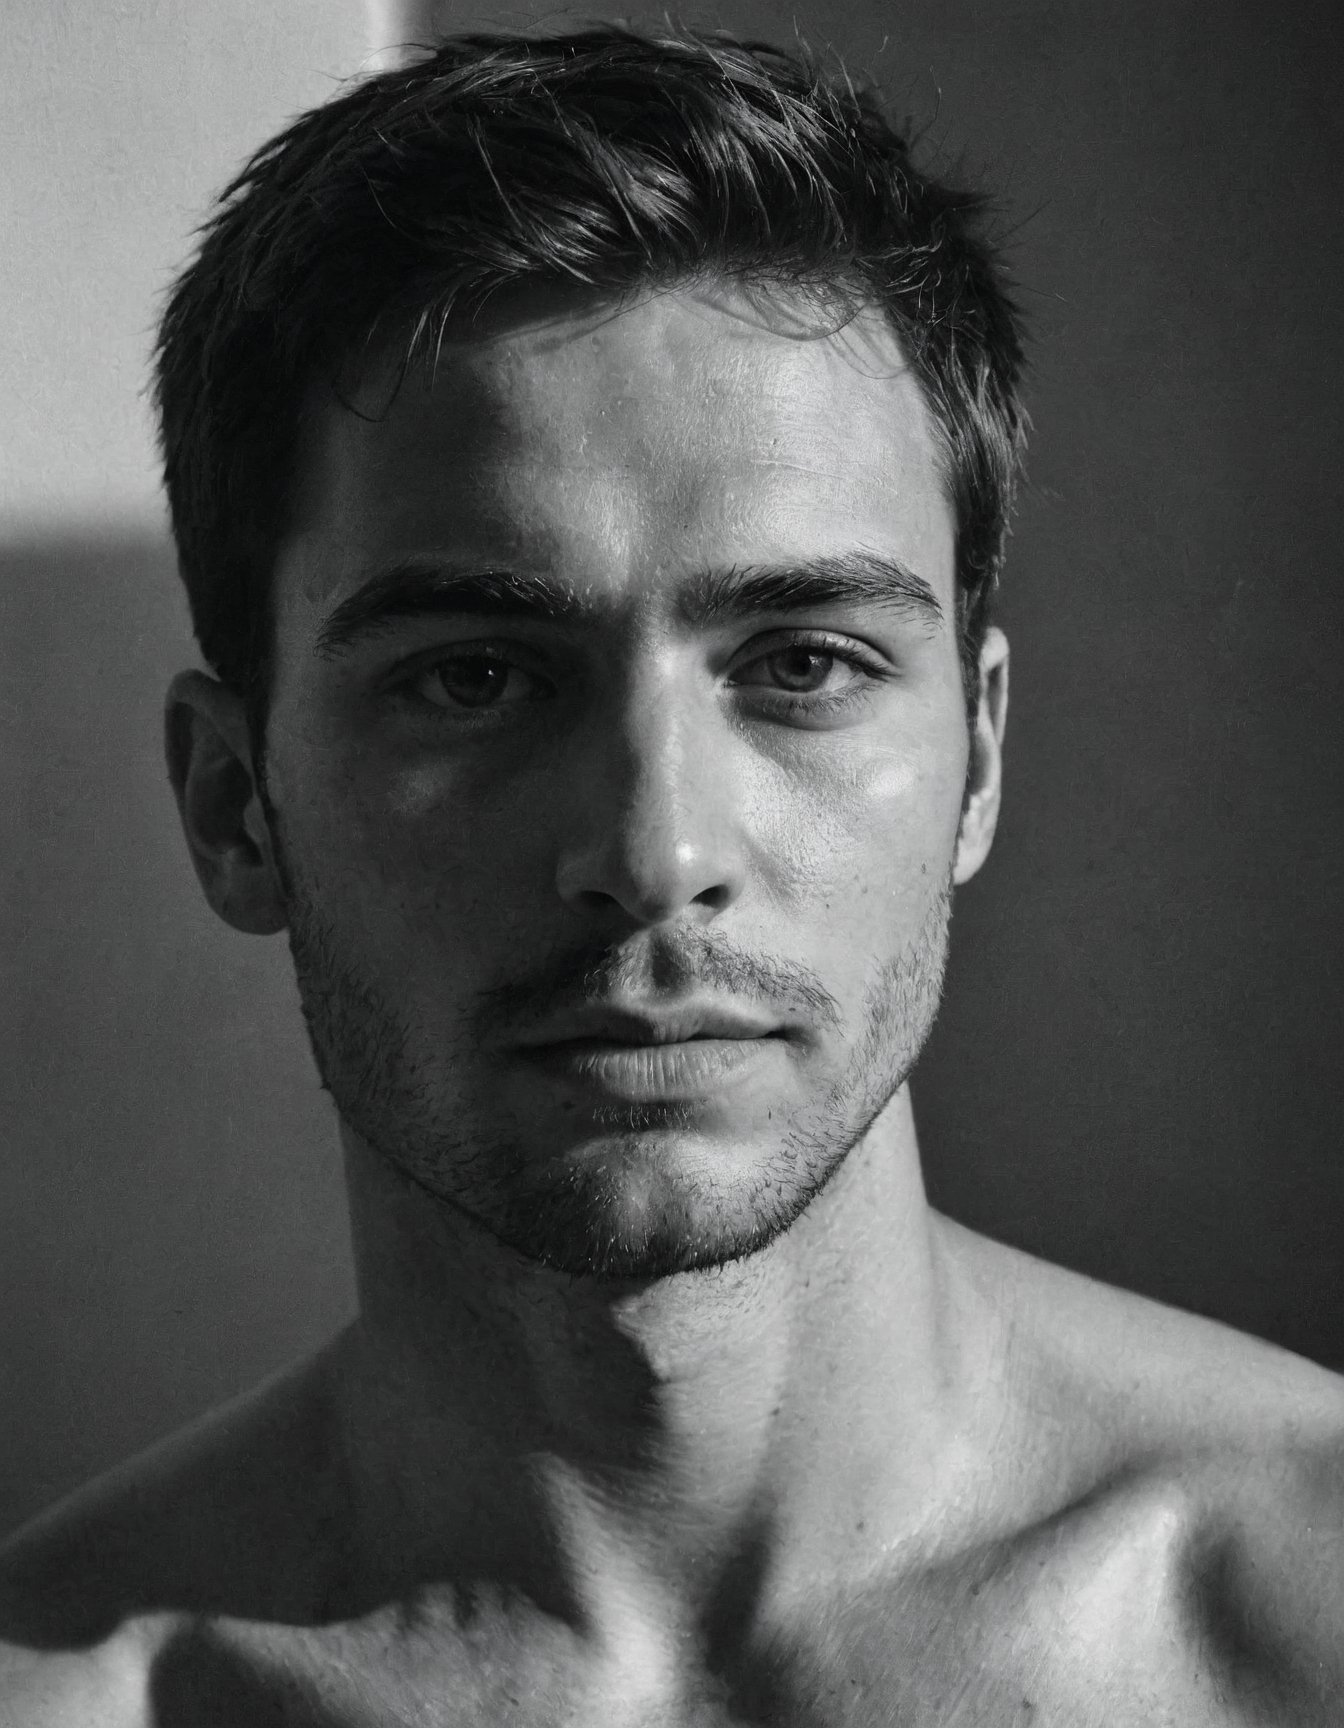 b&w, instagram photo, portrait photo of man, 28 y.o, perfect face, natural skin, hard shadows, film grain